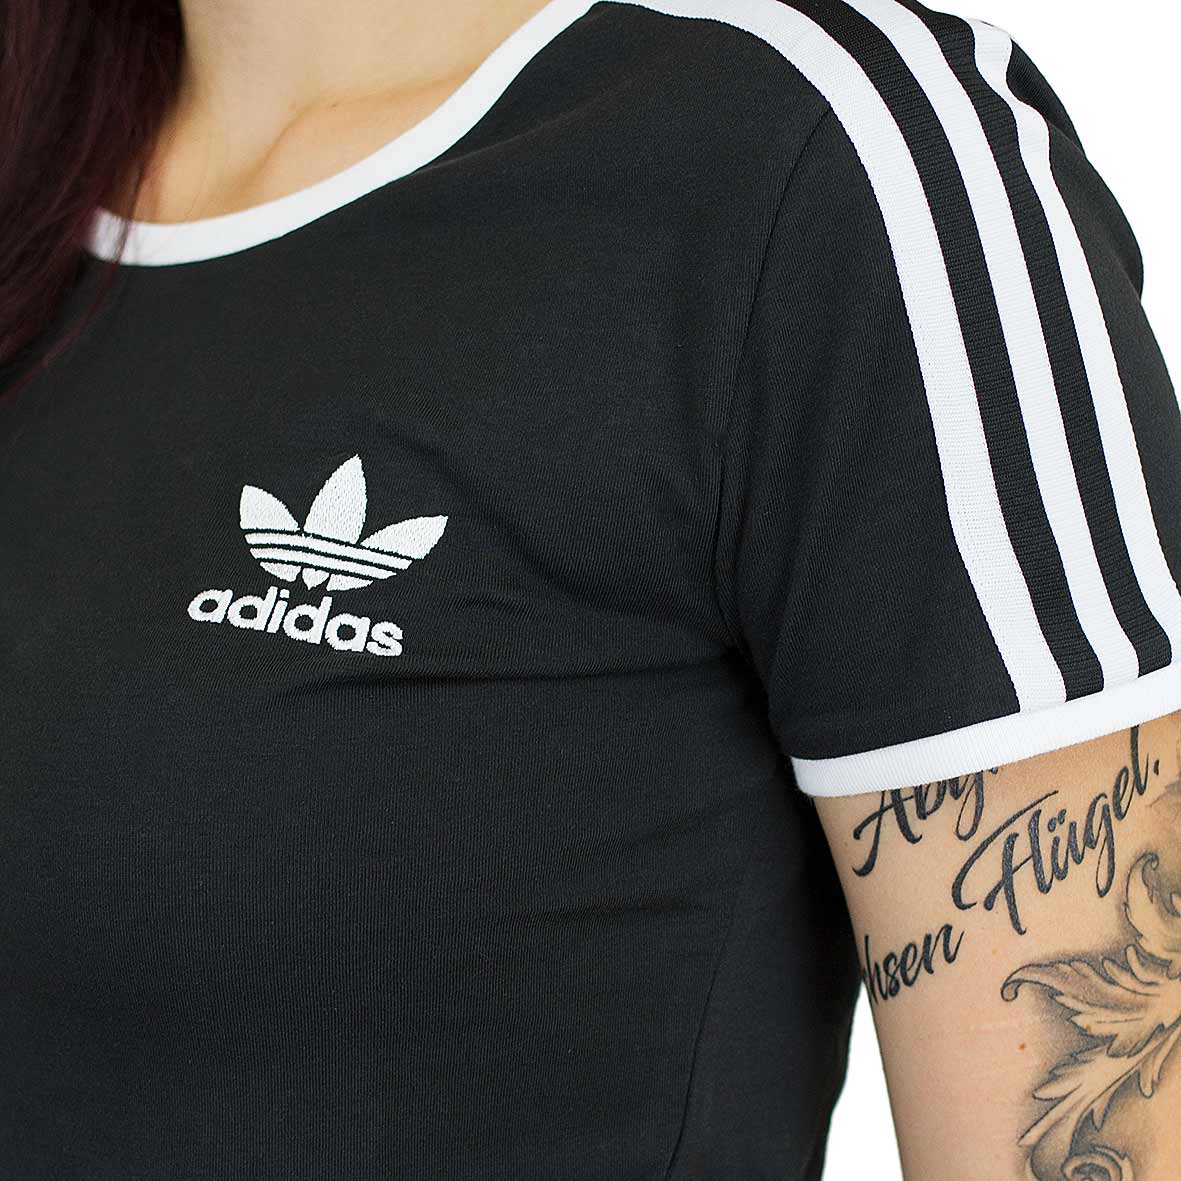 ☆ Adidas Originals T-Shirt Sandra schwarz - hier bestellen!